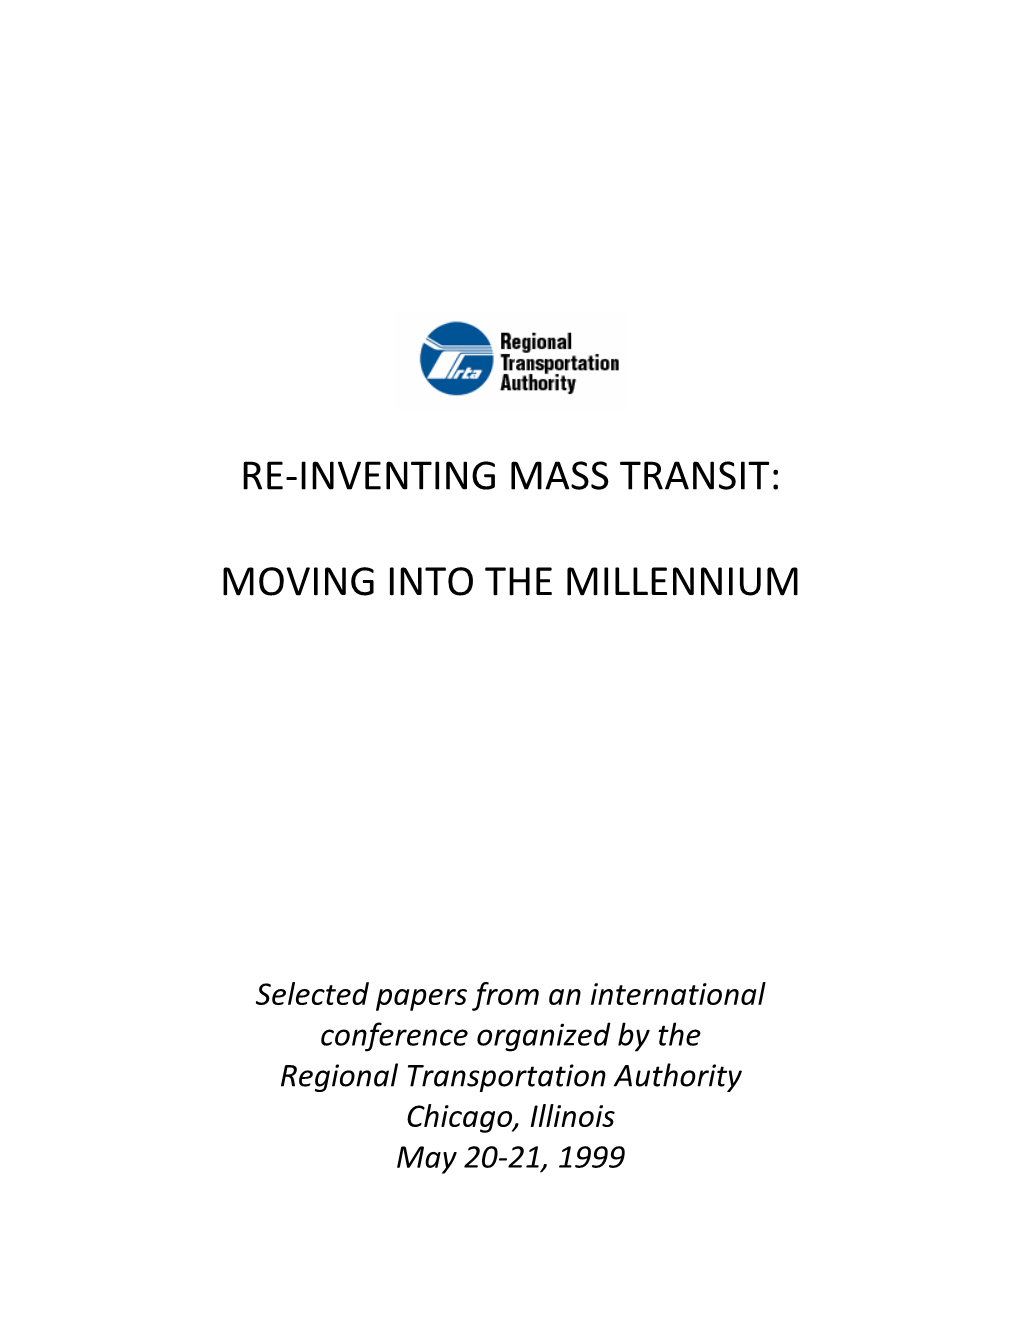 Re-Inventing Mass Transit